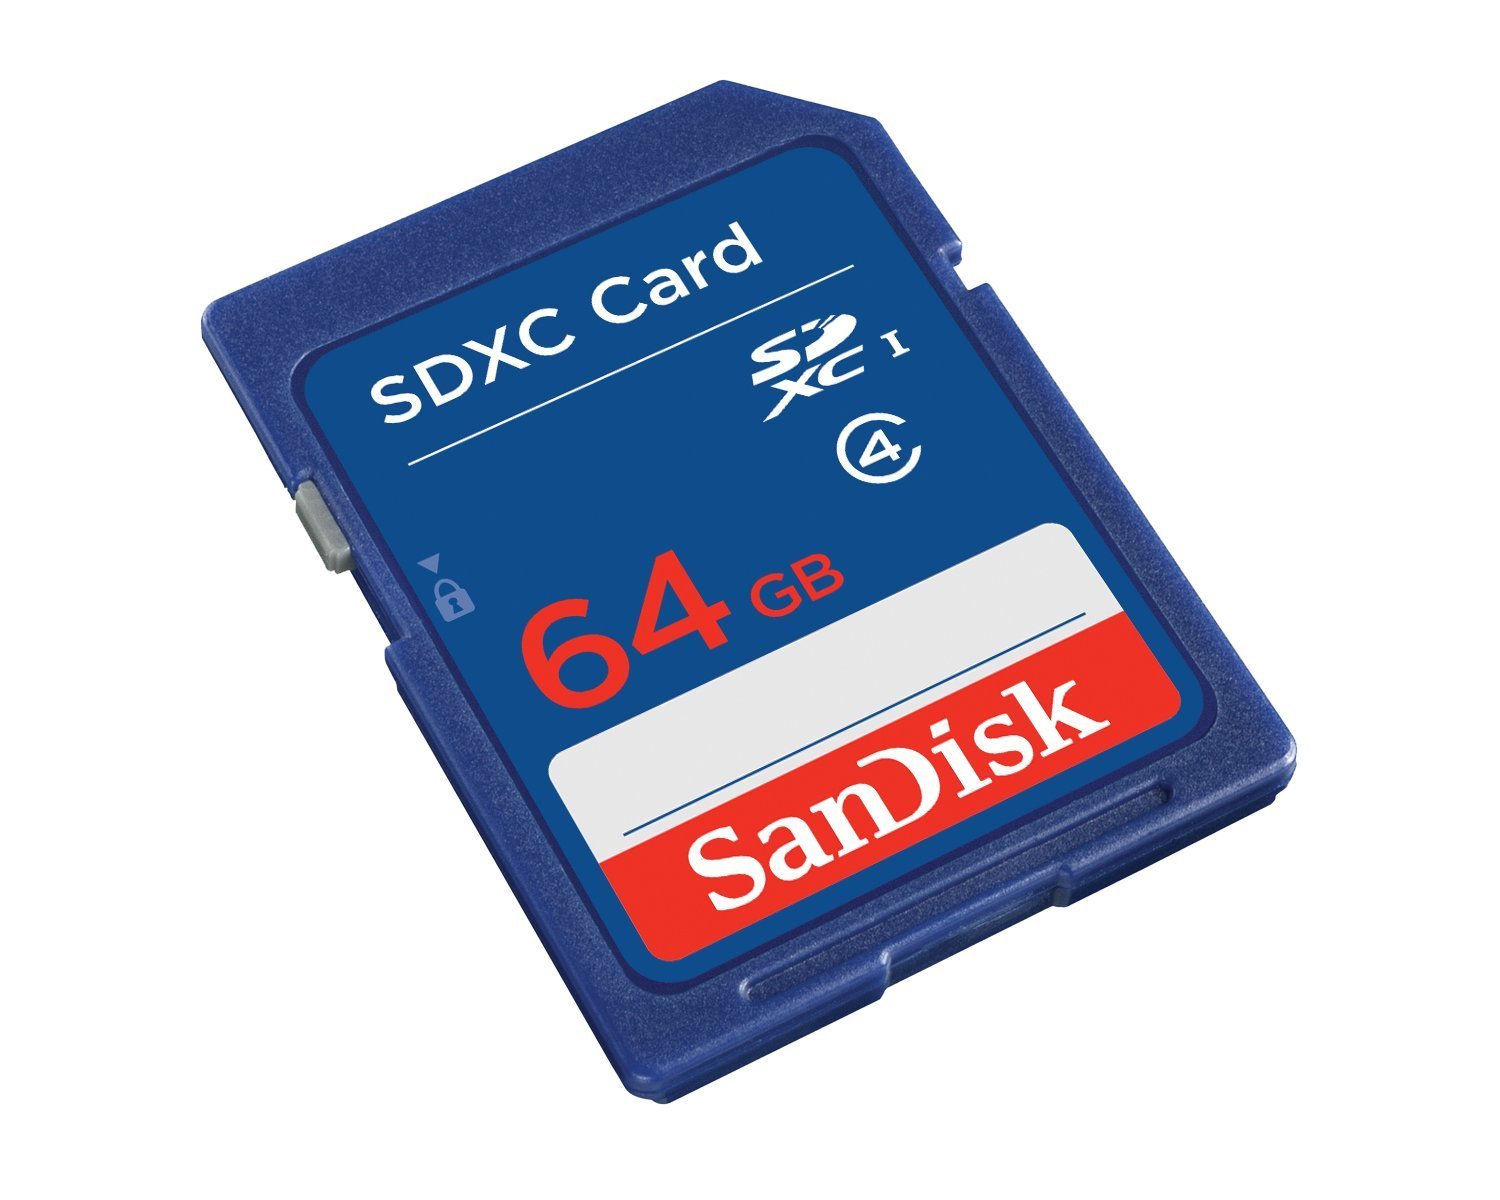 SanDisk 64GB SDXC Class 4 Card (SDSDB-064G)